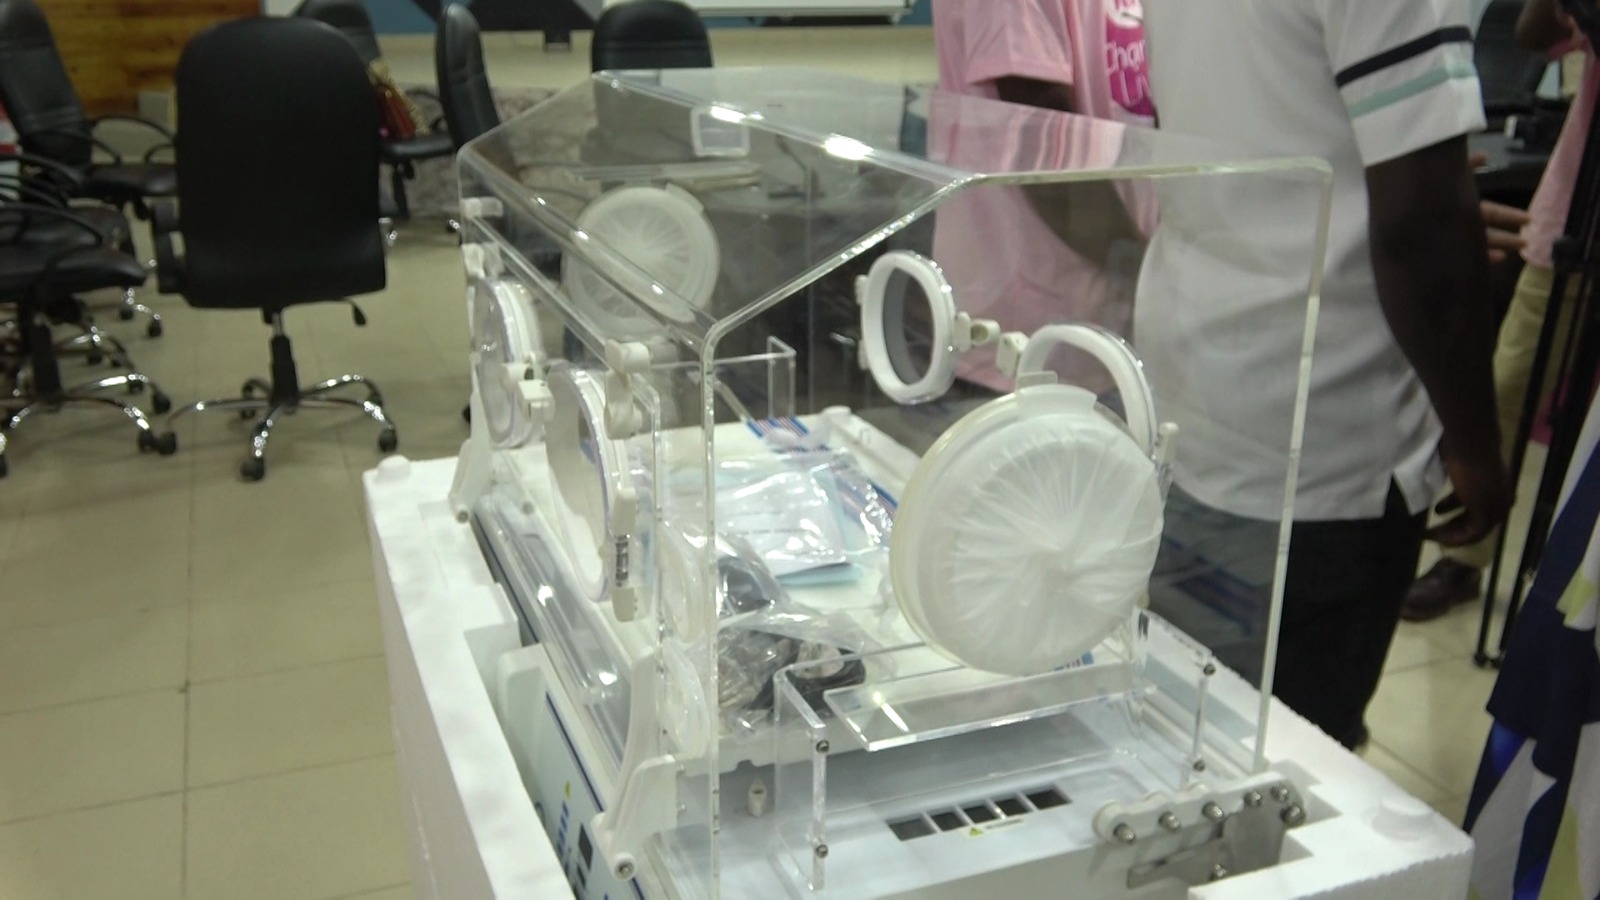 Twellium donates incubators, phototherapy devices to health facilities